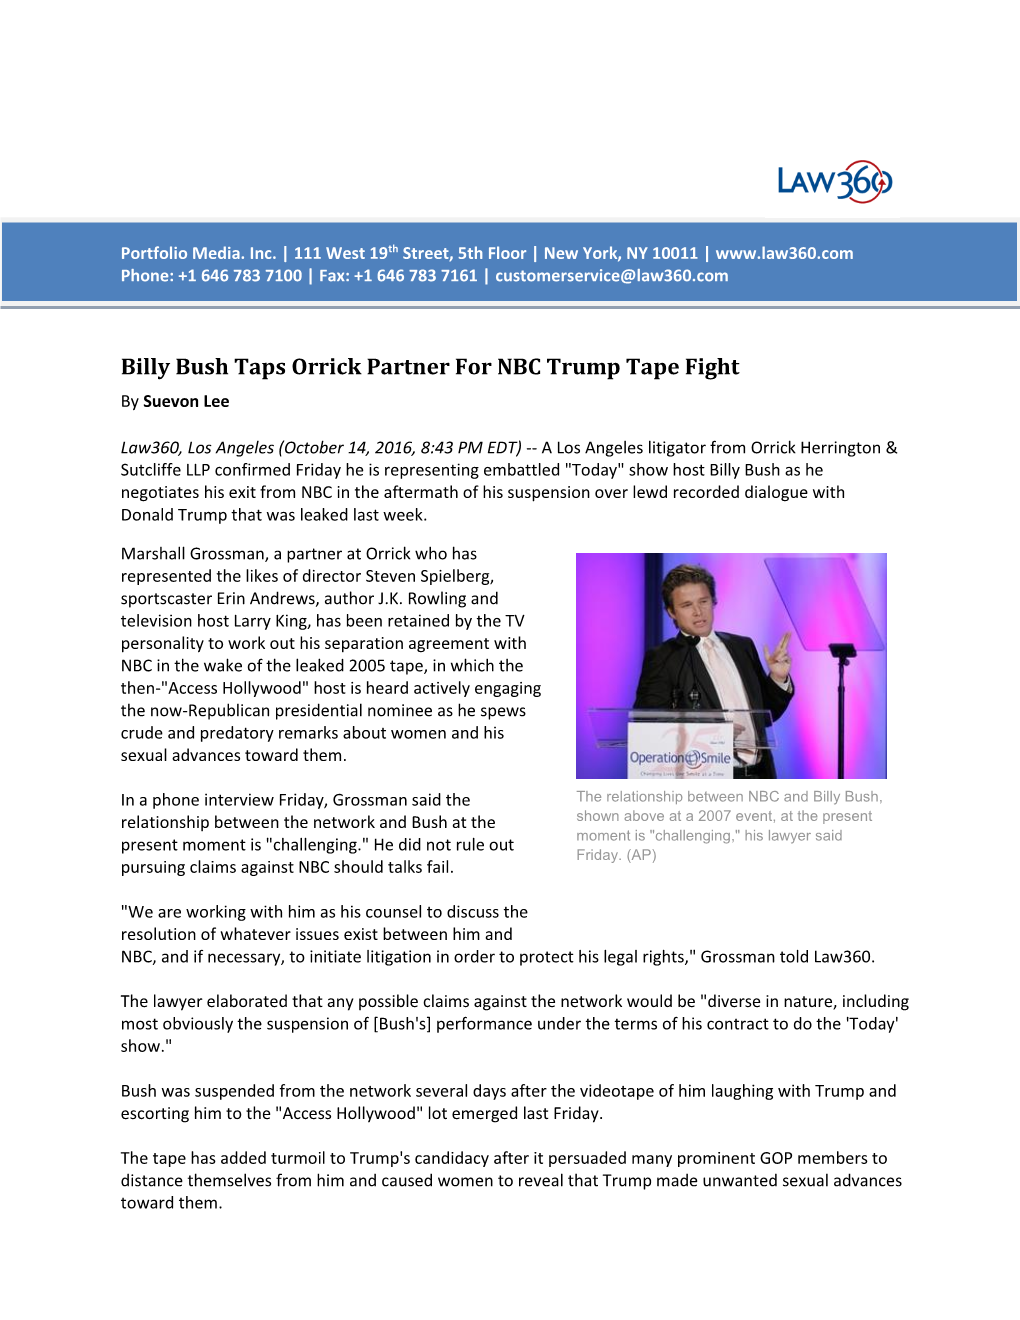 Billy Bush Taps Orrick Partner for NBC Trump Tape Fight by Suevon Lee